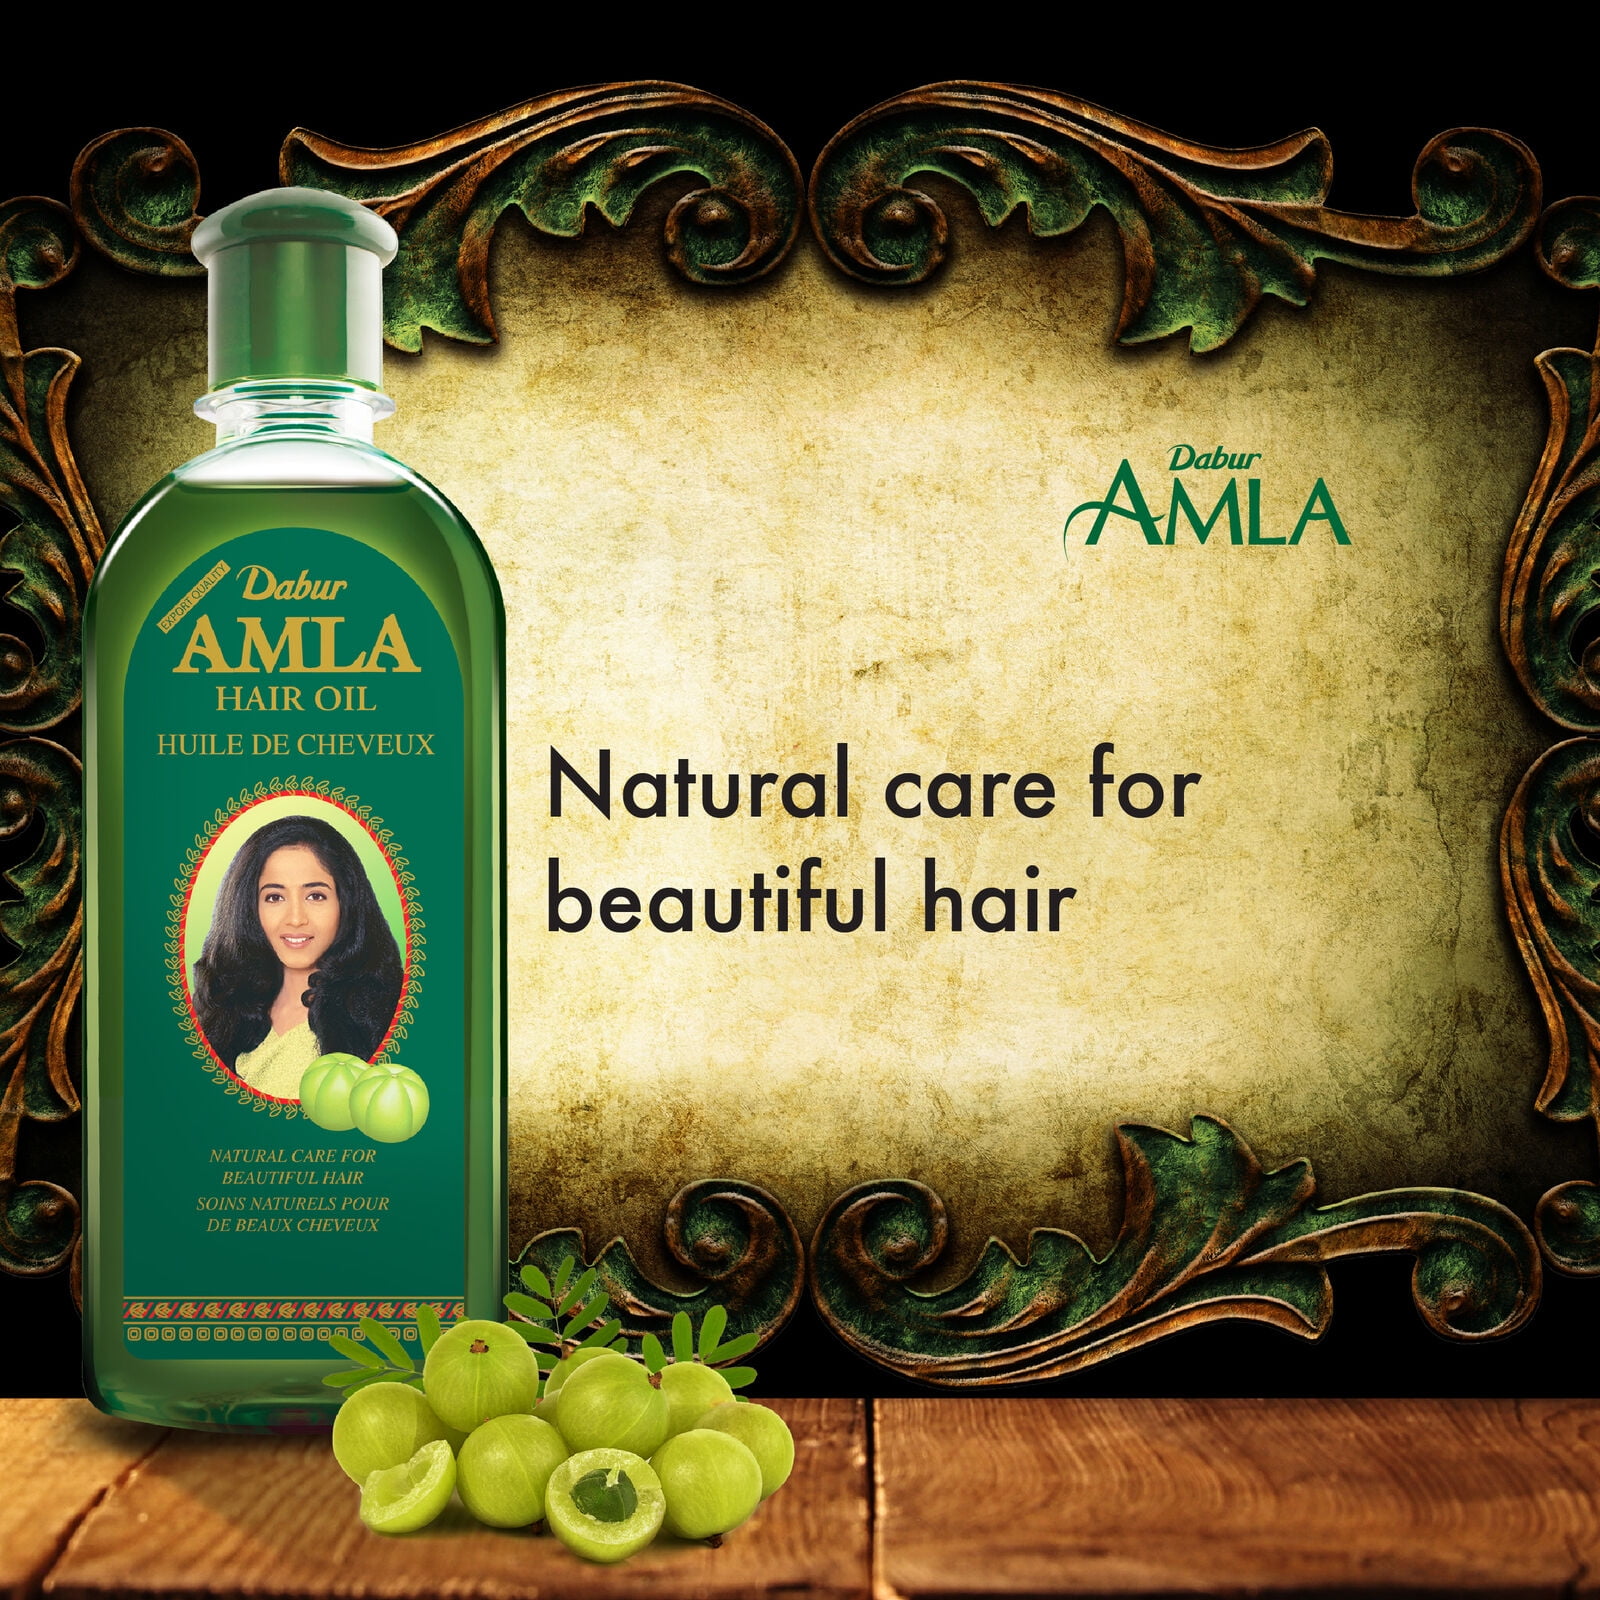 Dabur Amla hair oil 200ml-Make Your Hair Long,Strong & Dark NEW ORIGINAL